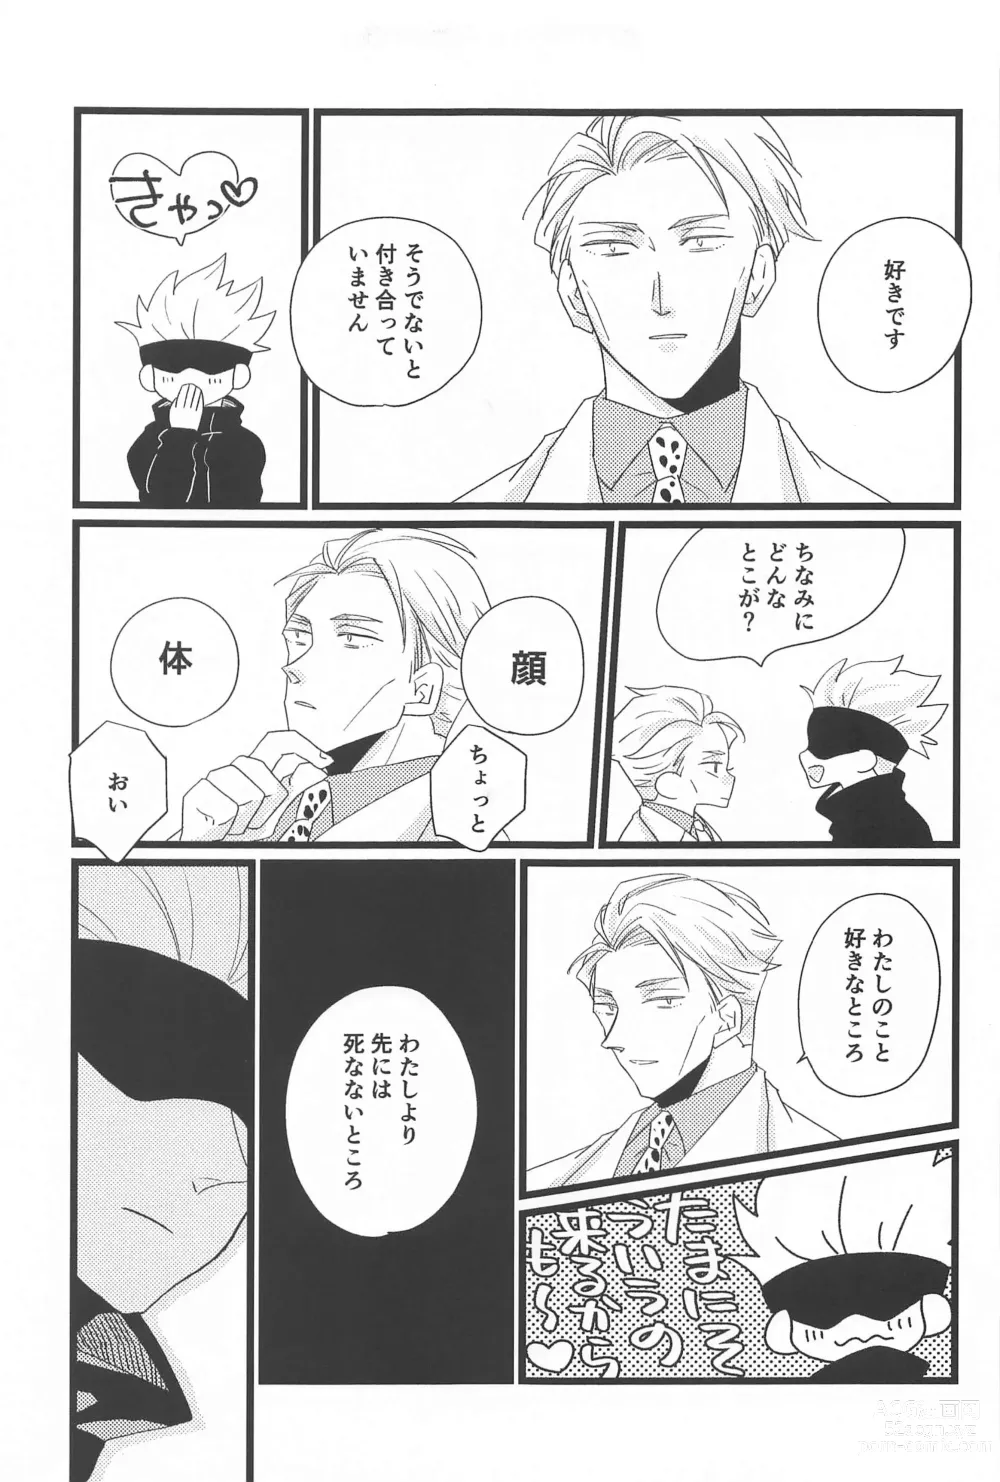 Page 10 of doujinshi timeless memory 2